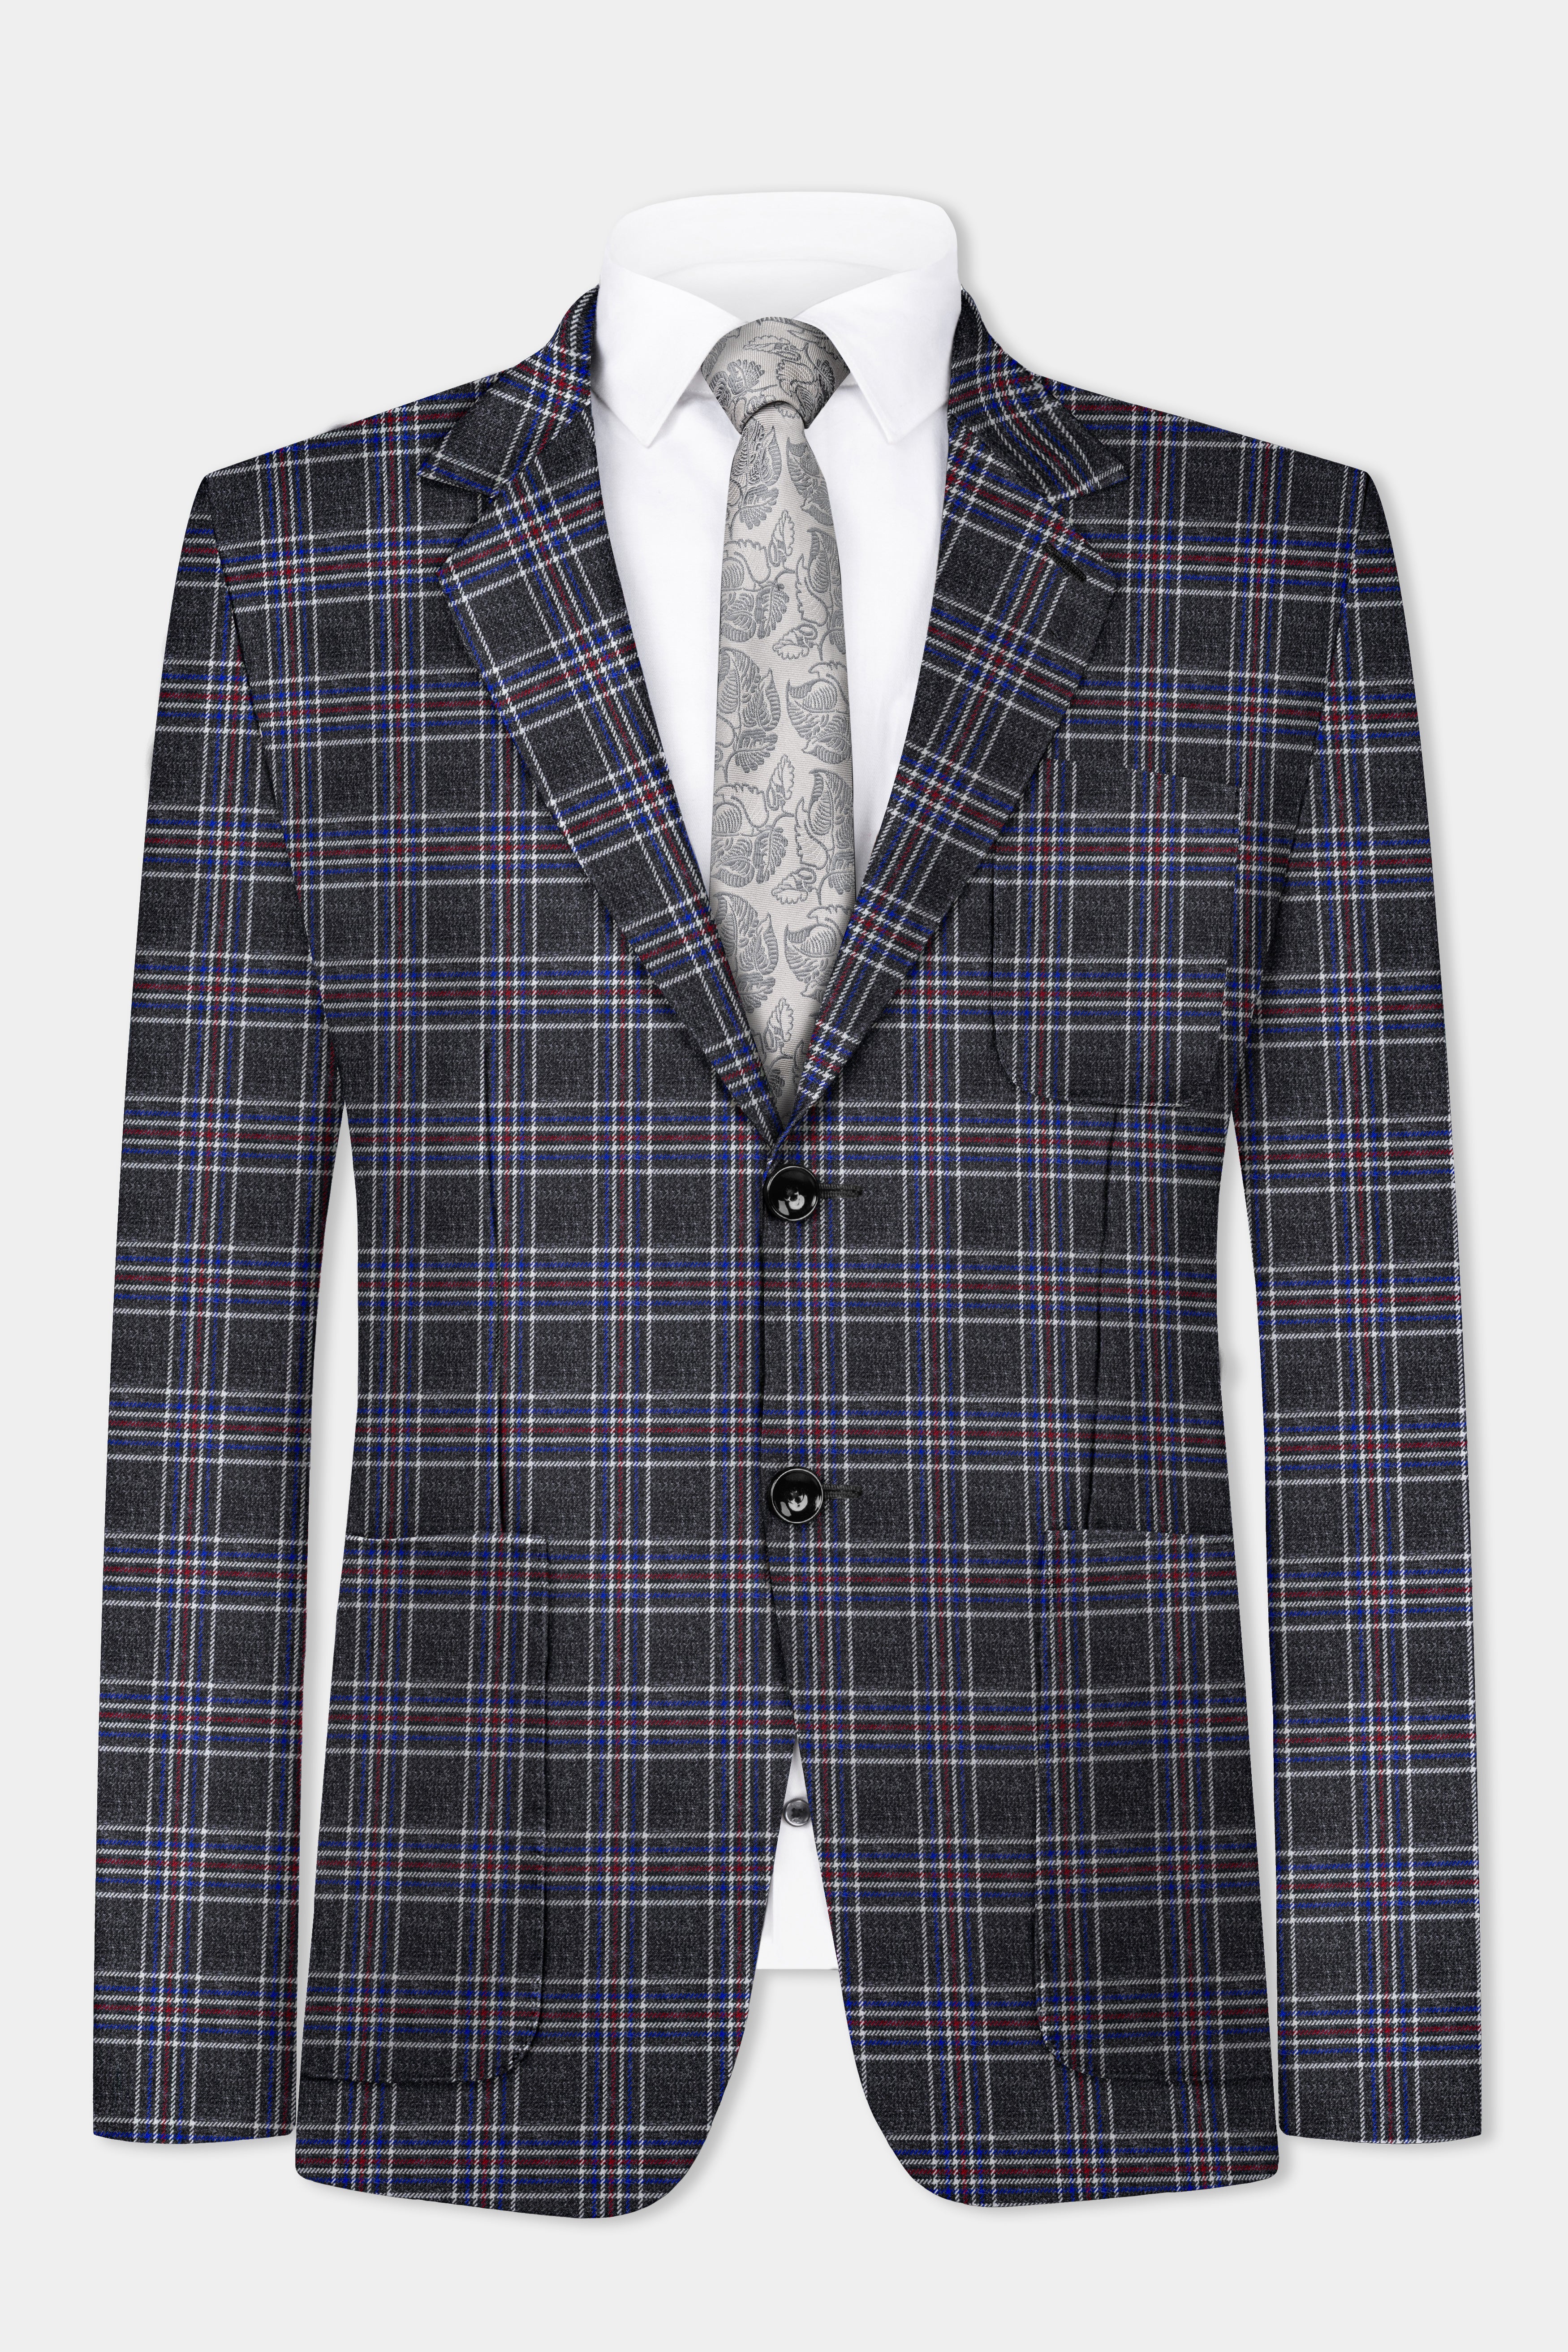 Tuatara Gray Multicolour Plaid Tweed Suit